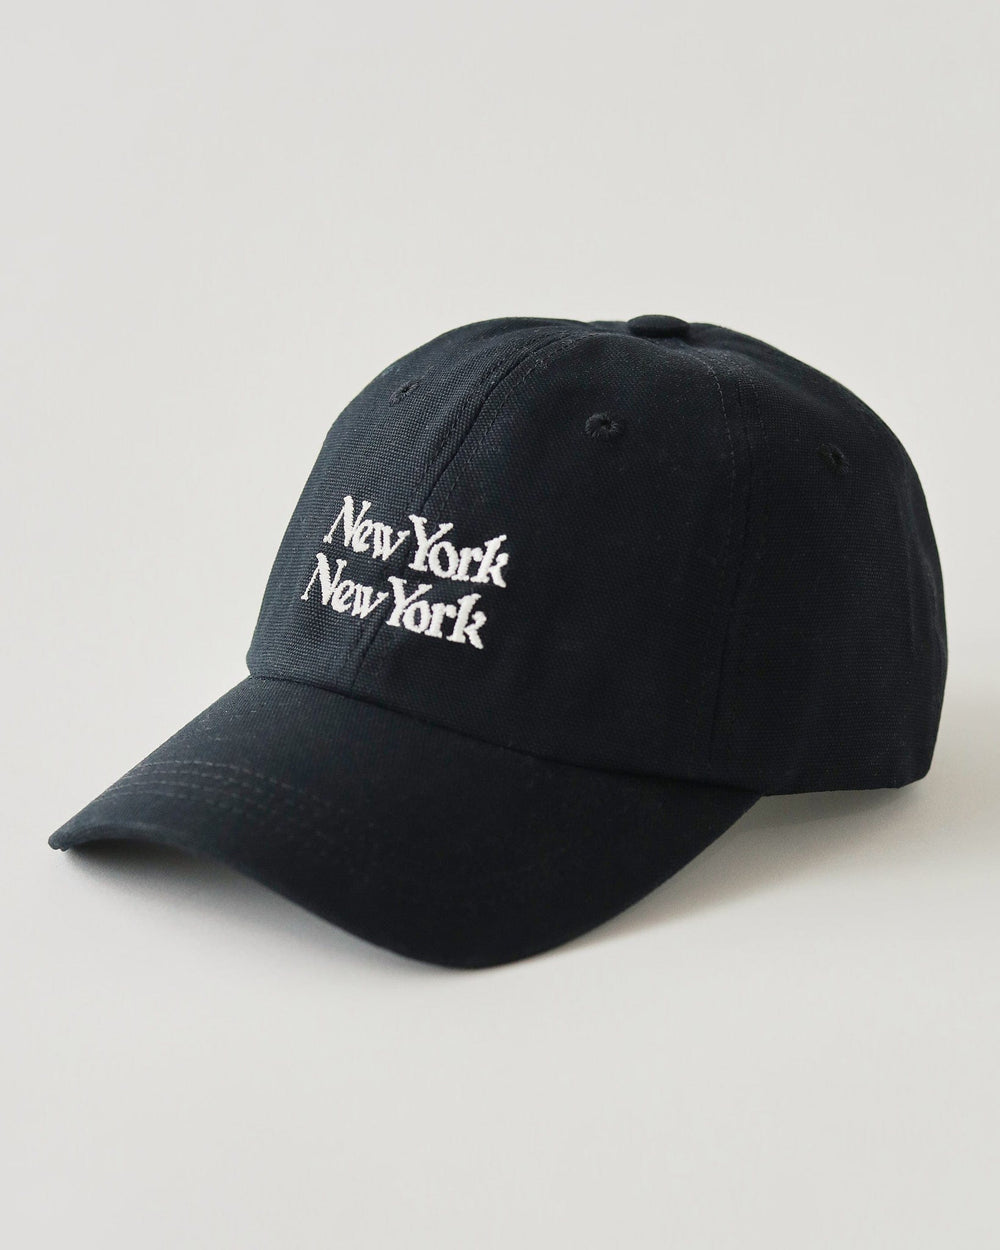 New York New York Cap - Black